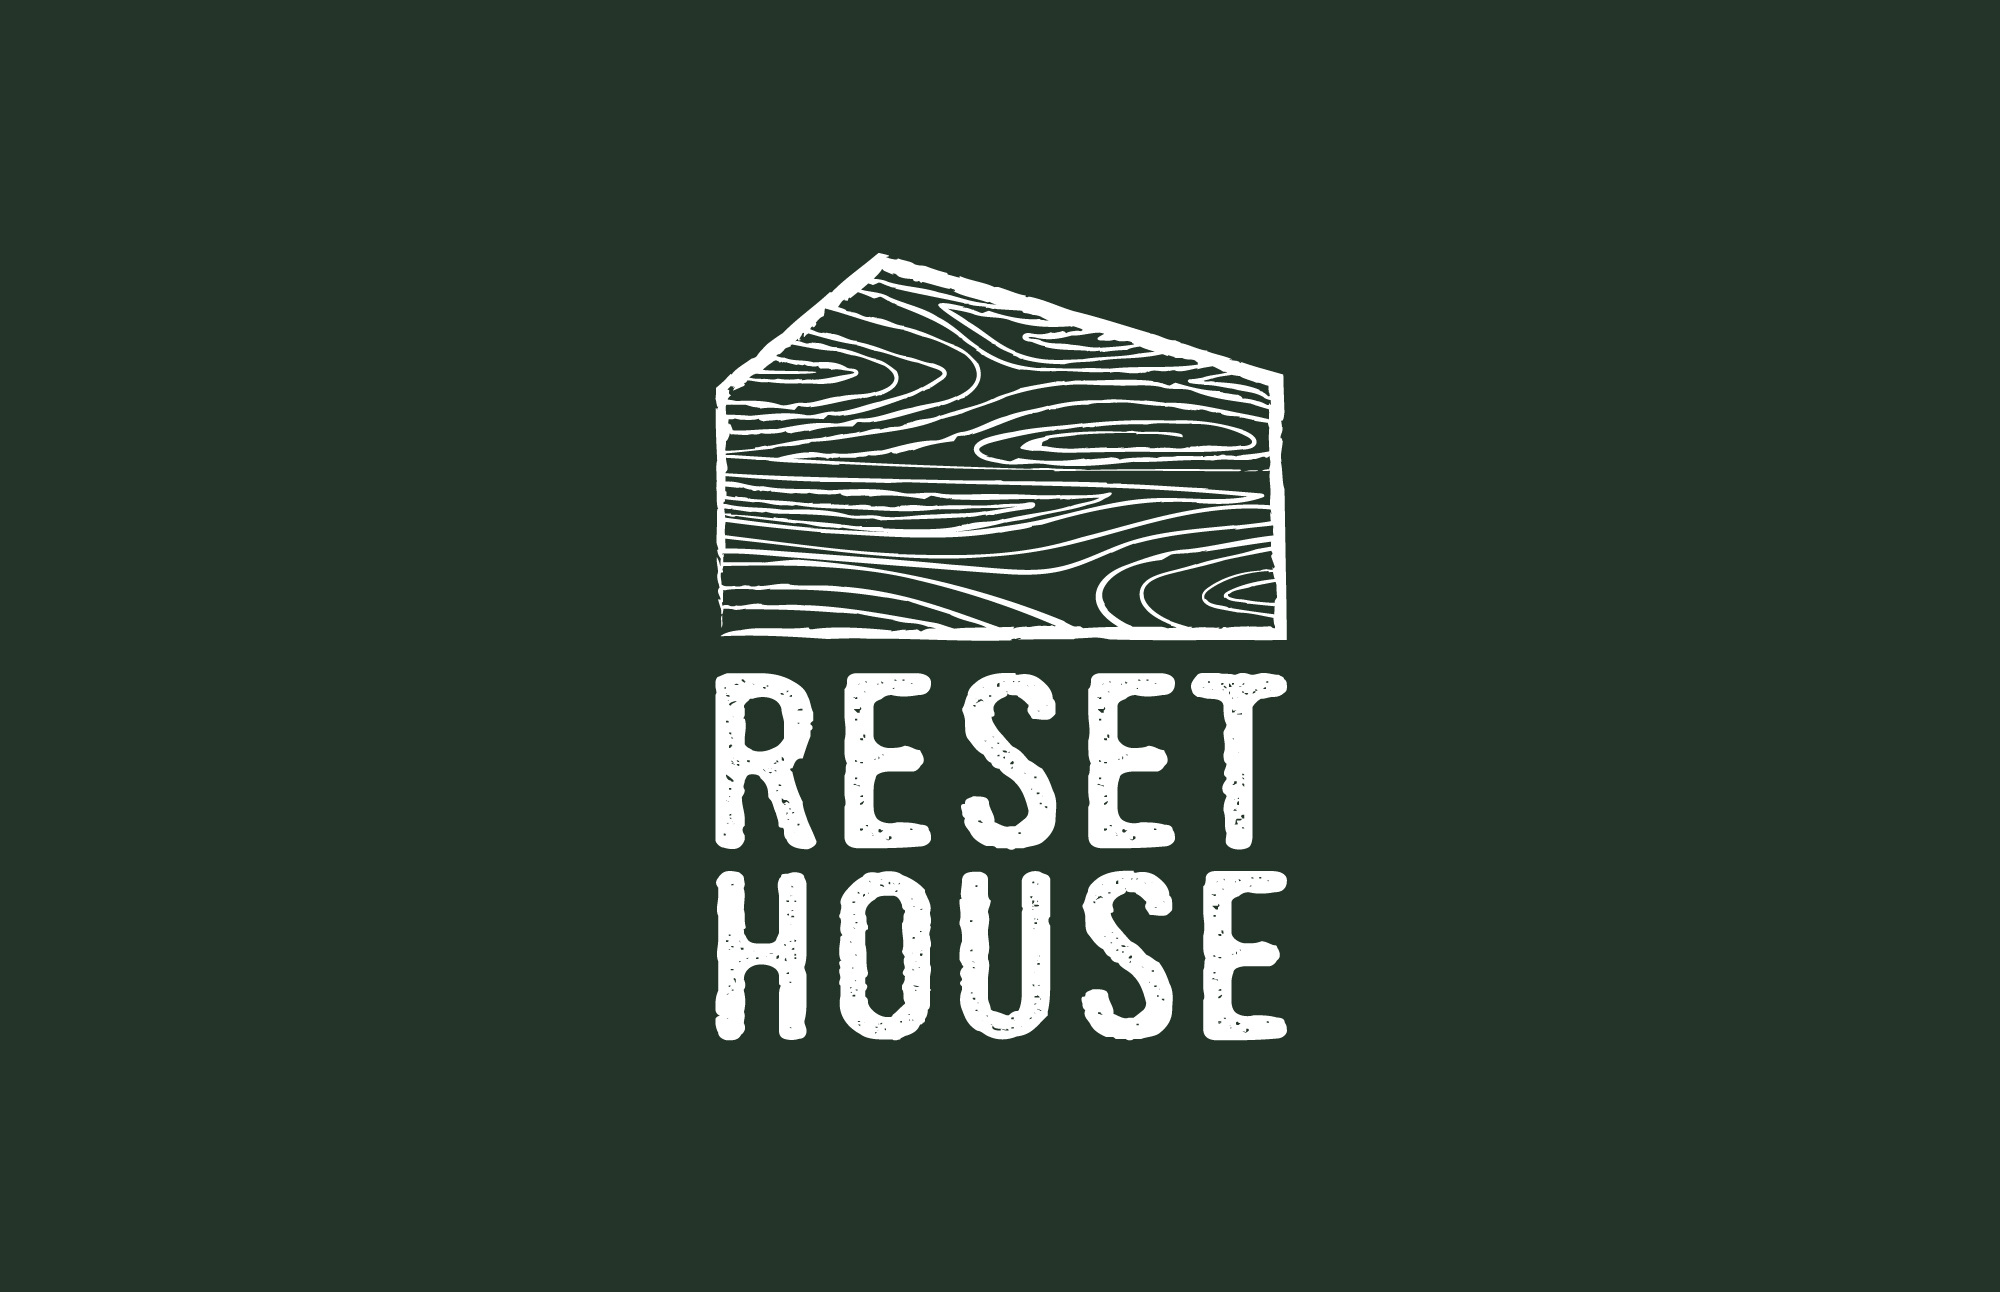 Reset House logo by GPU Design